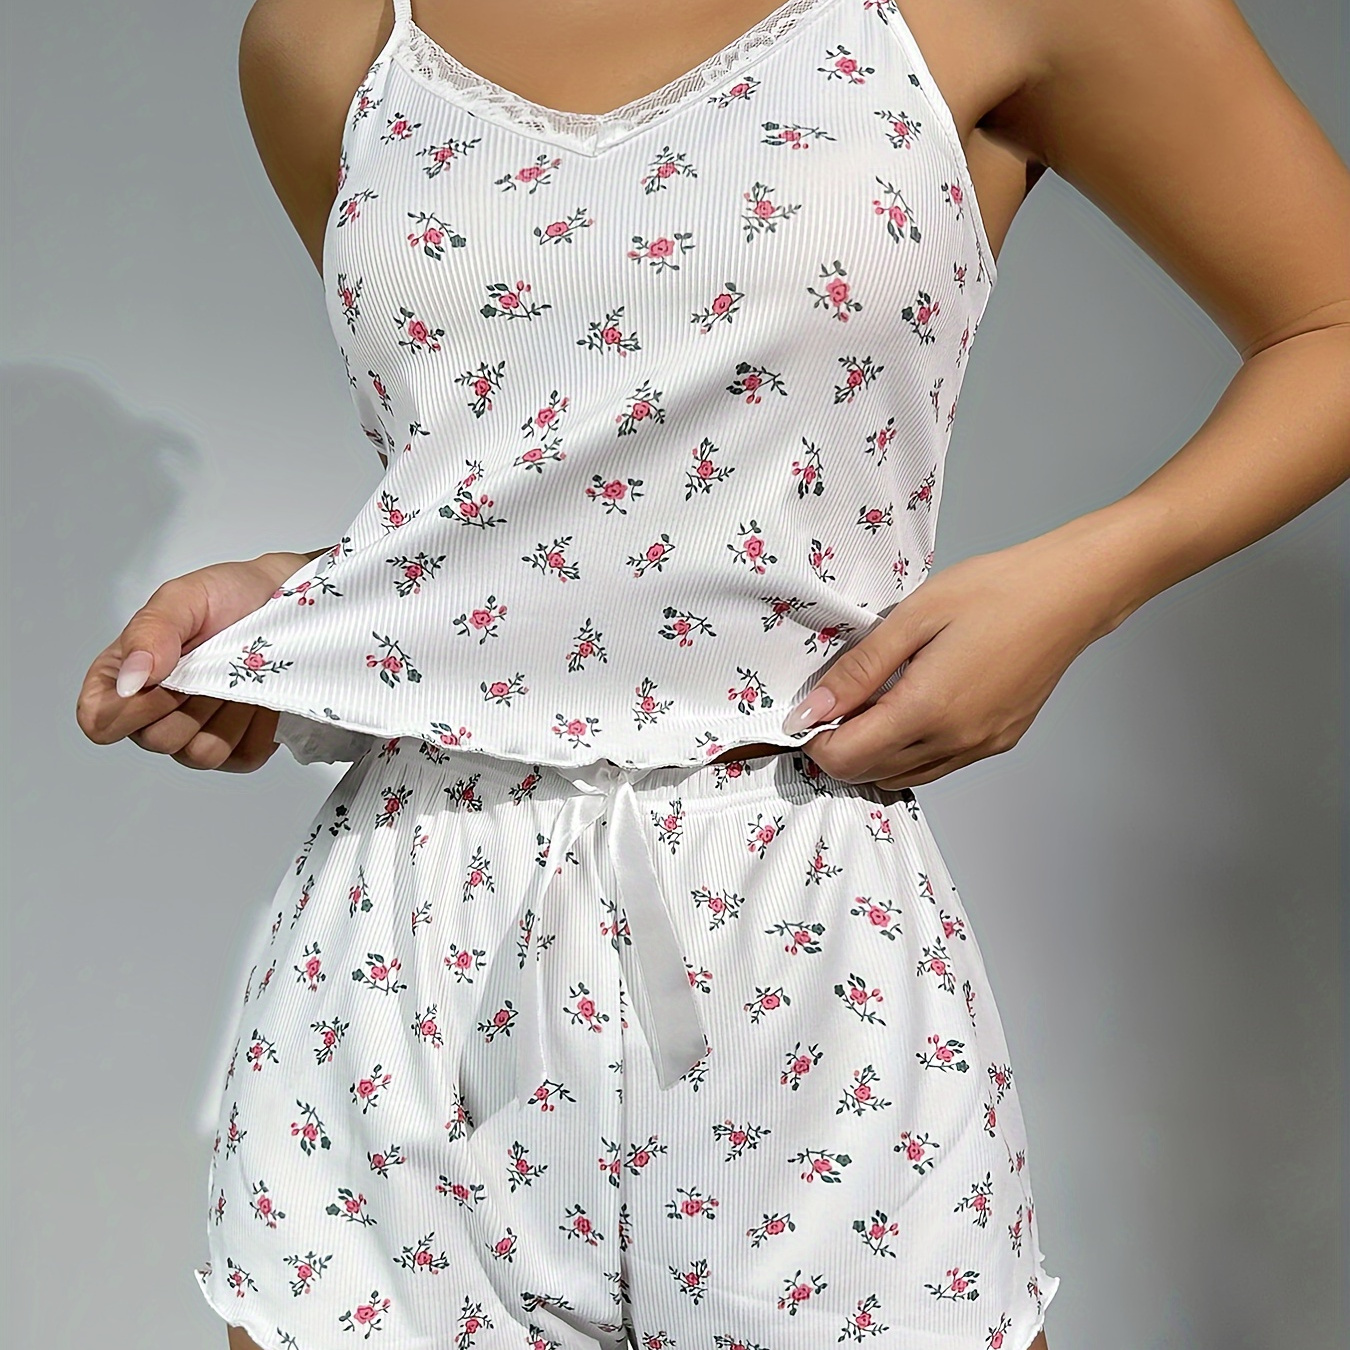 Ditsy Floral Print Lace Trim Cami Top & Shorts PJ Set